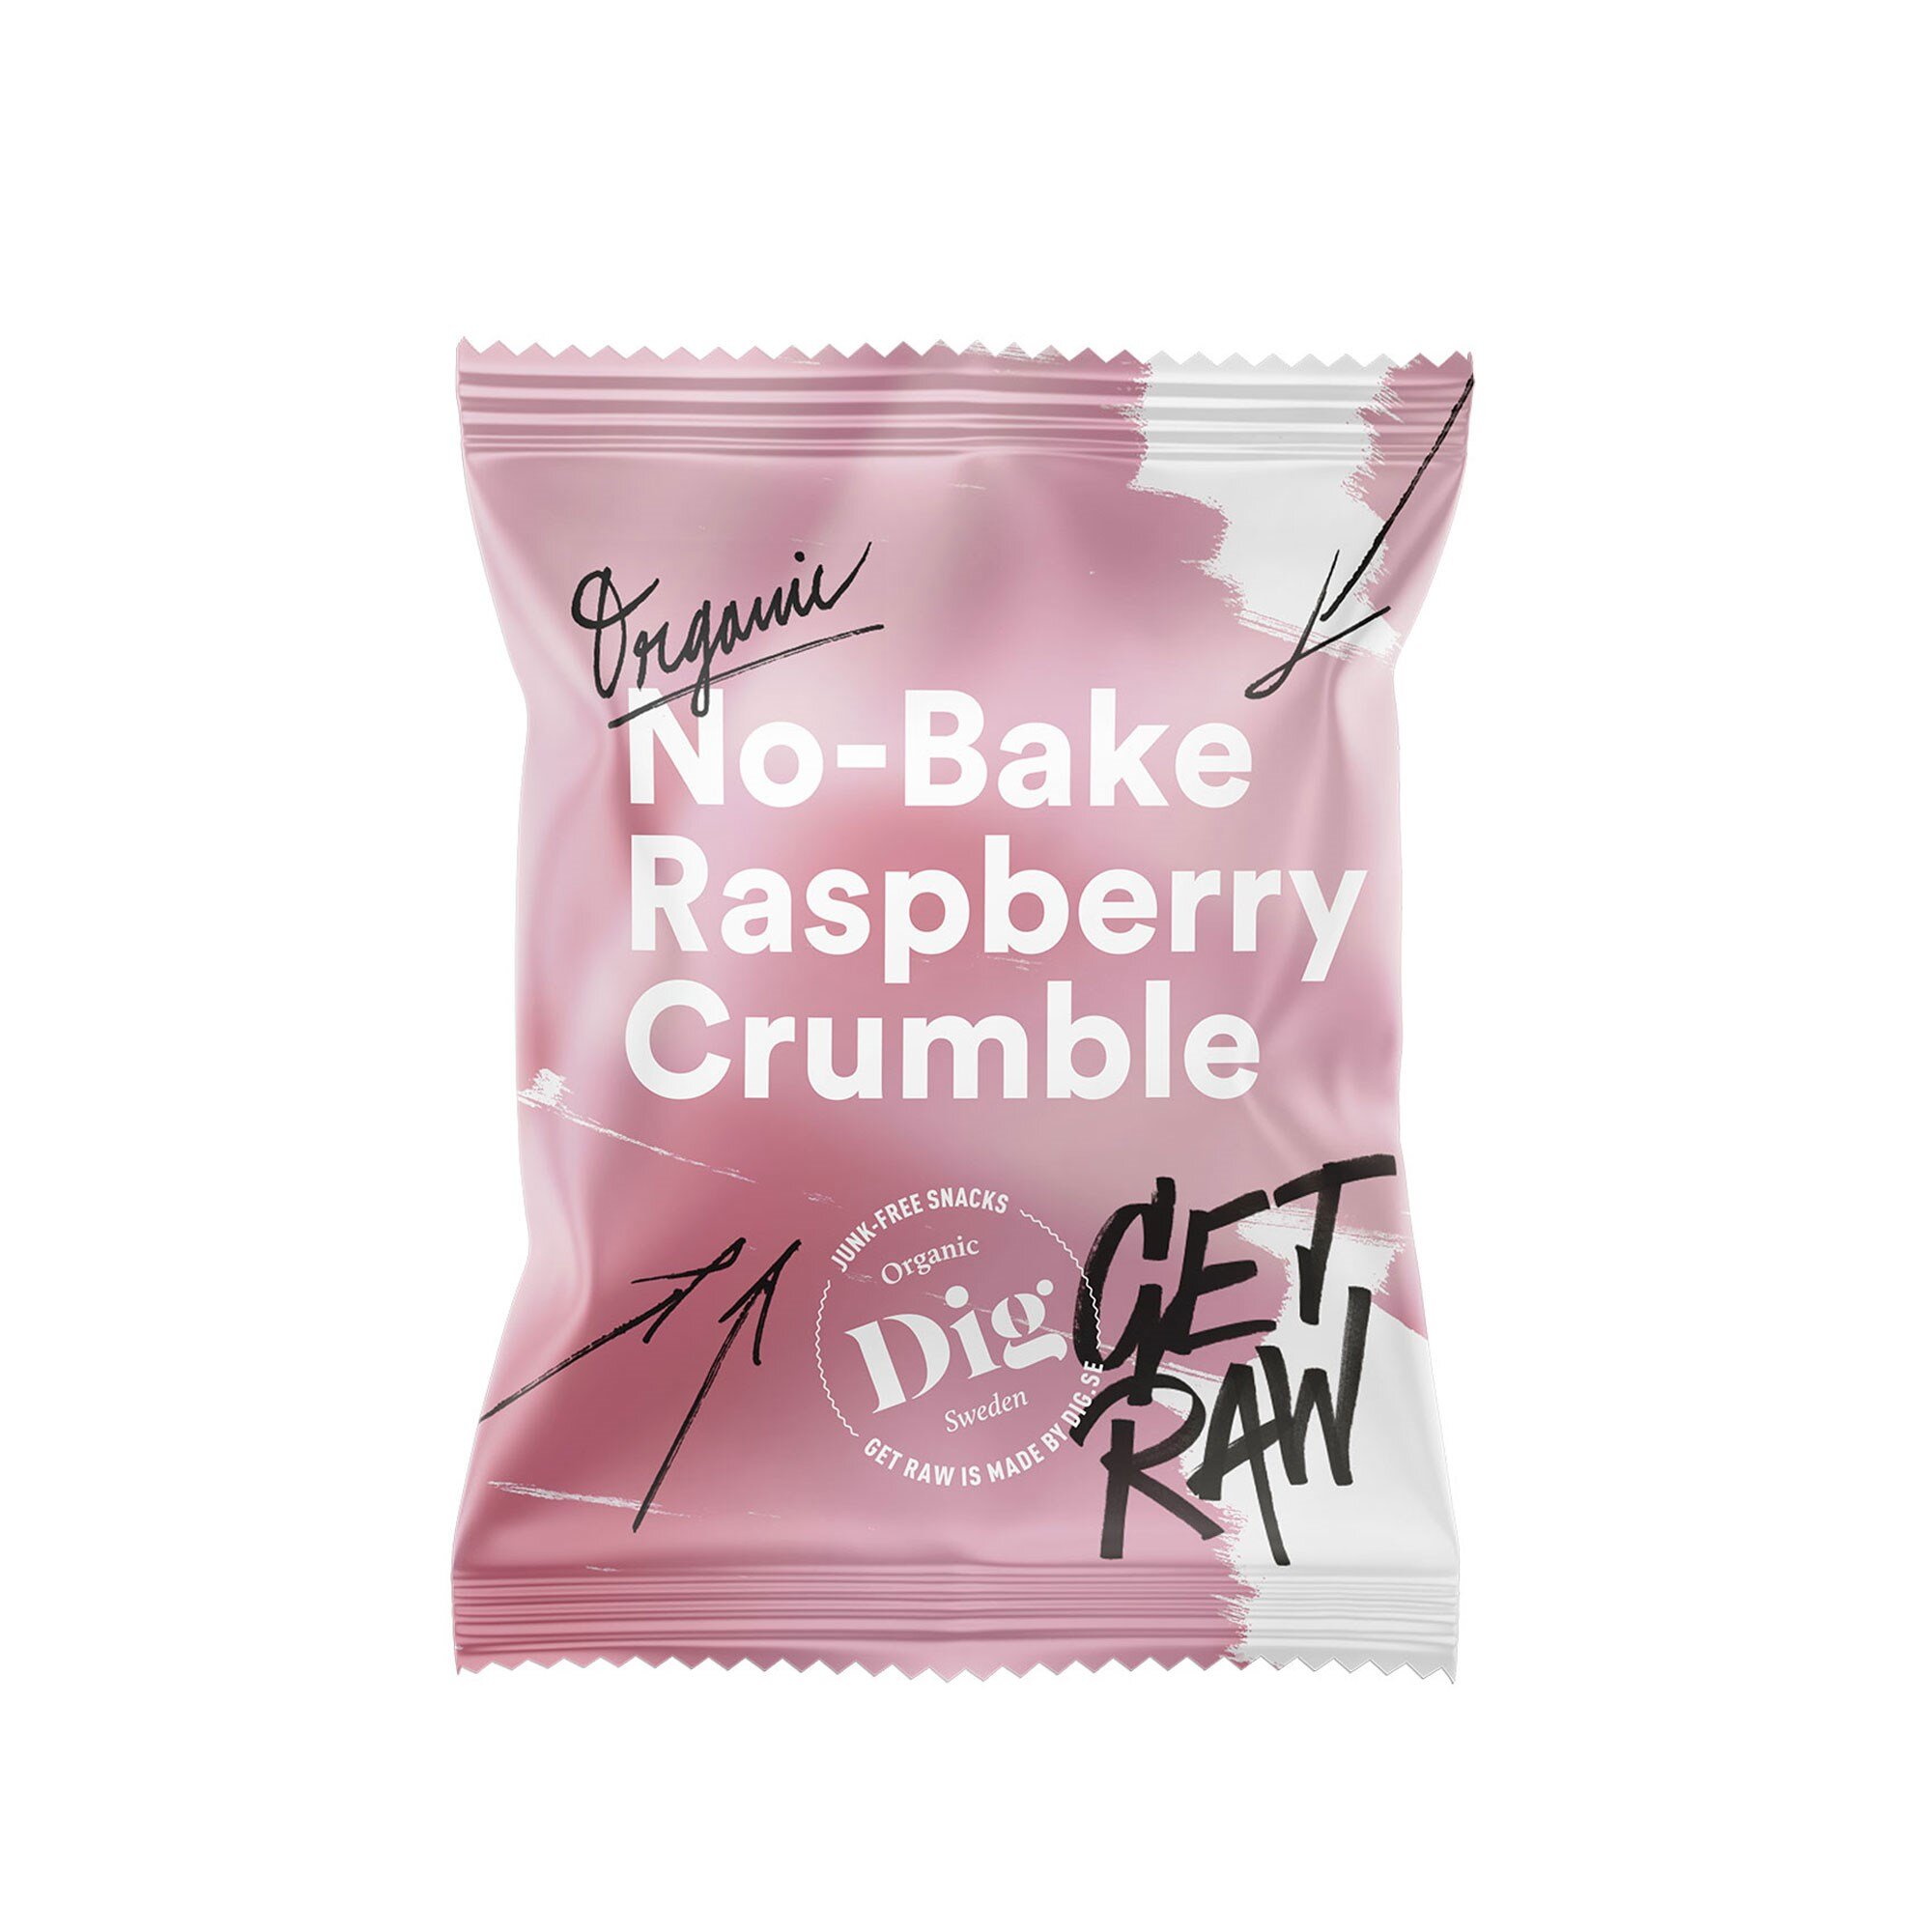 No-bake Raspberry Crumble